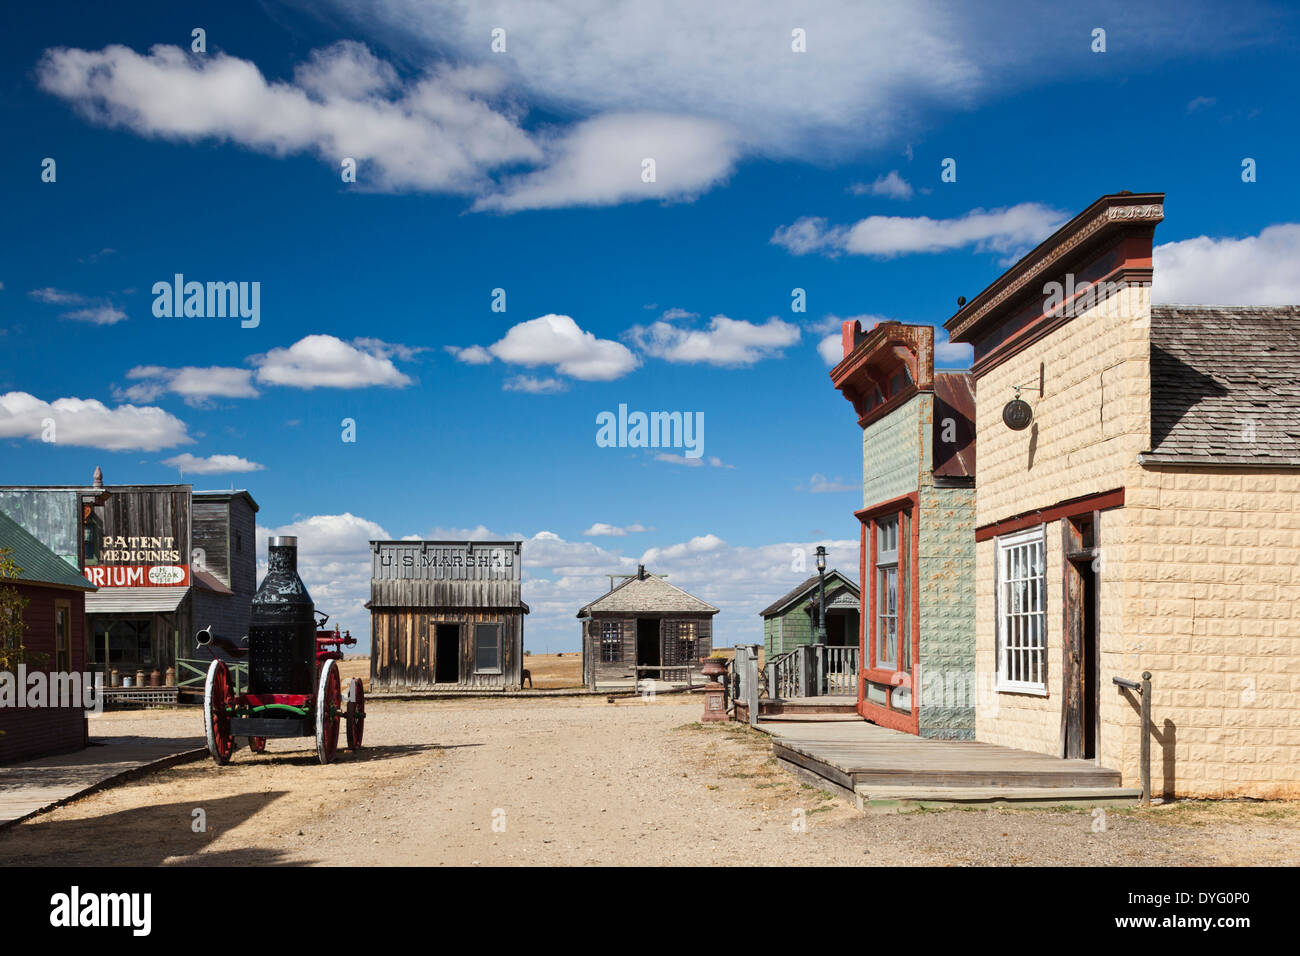 USA, South Dakota, Stamford, 1880 Town, pioneer village Stock Photo